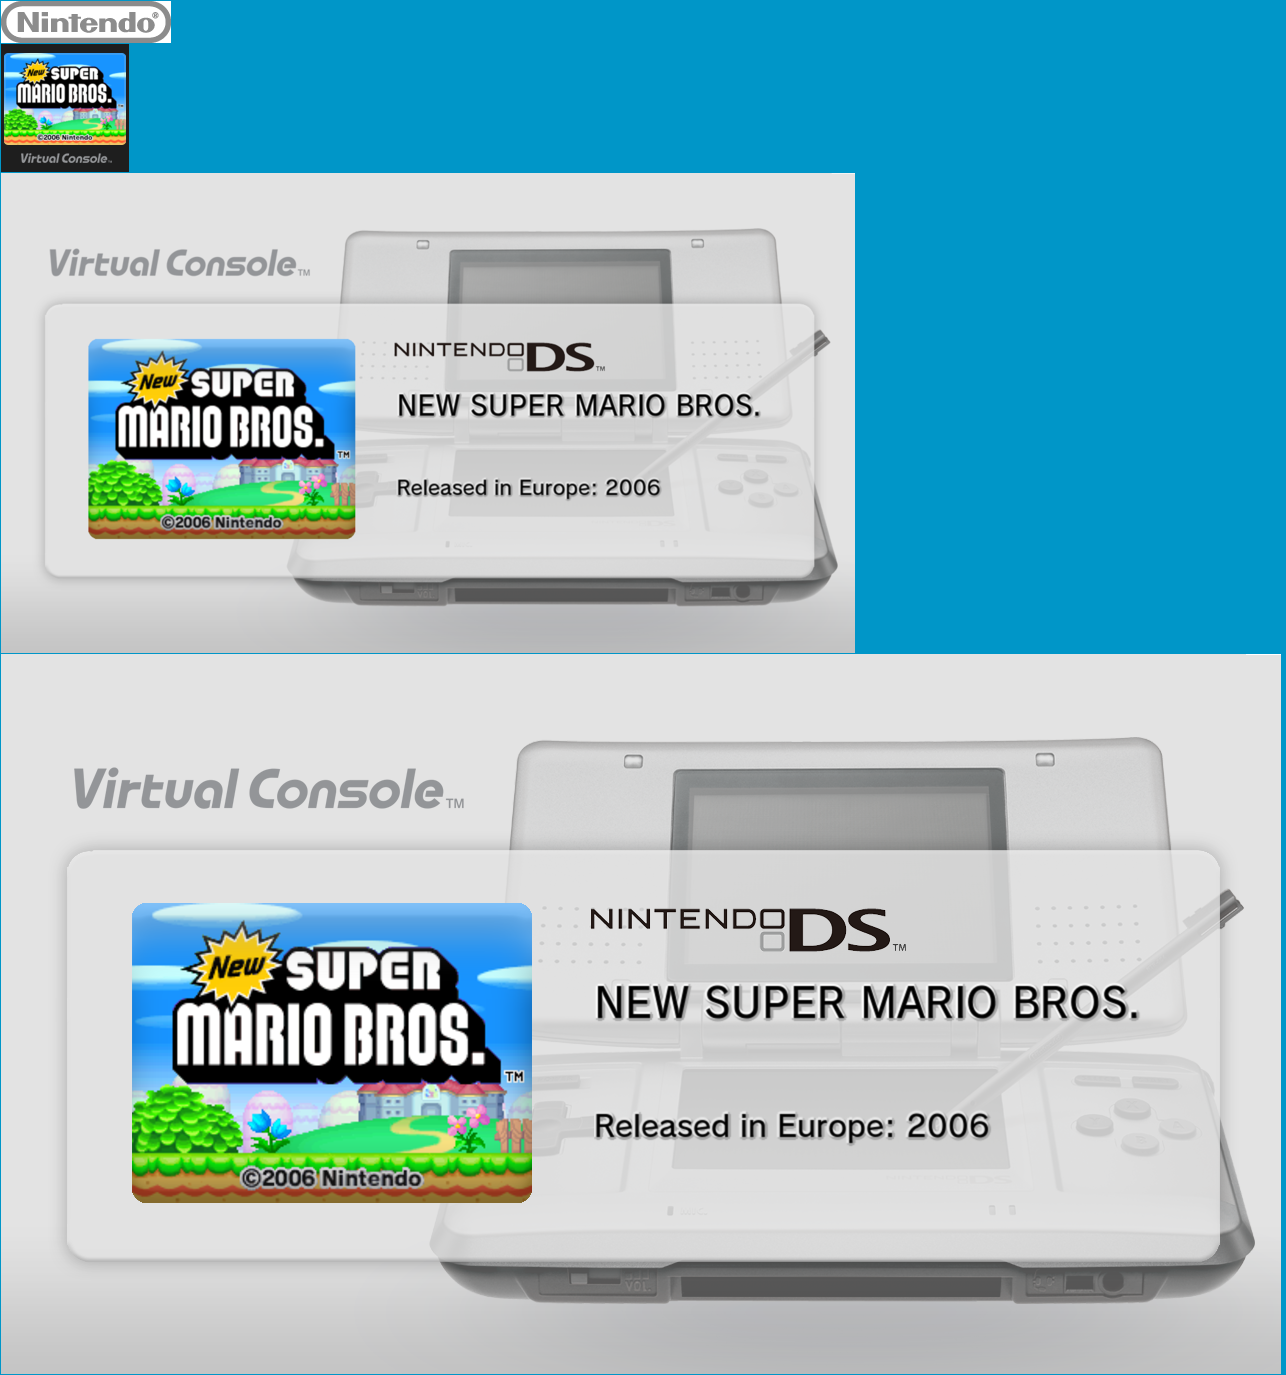 Virtual Console - NEW SUPER MARIO BROS.